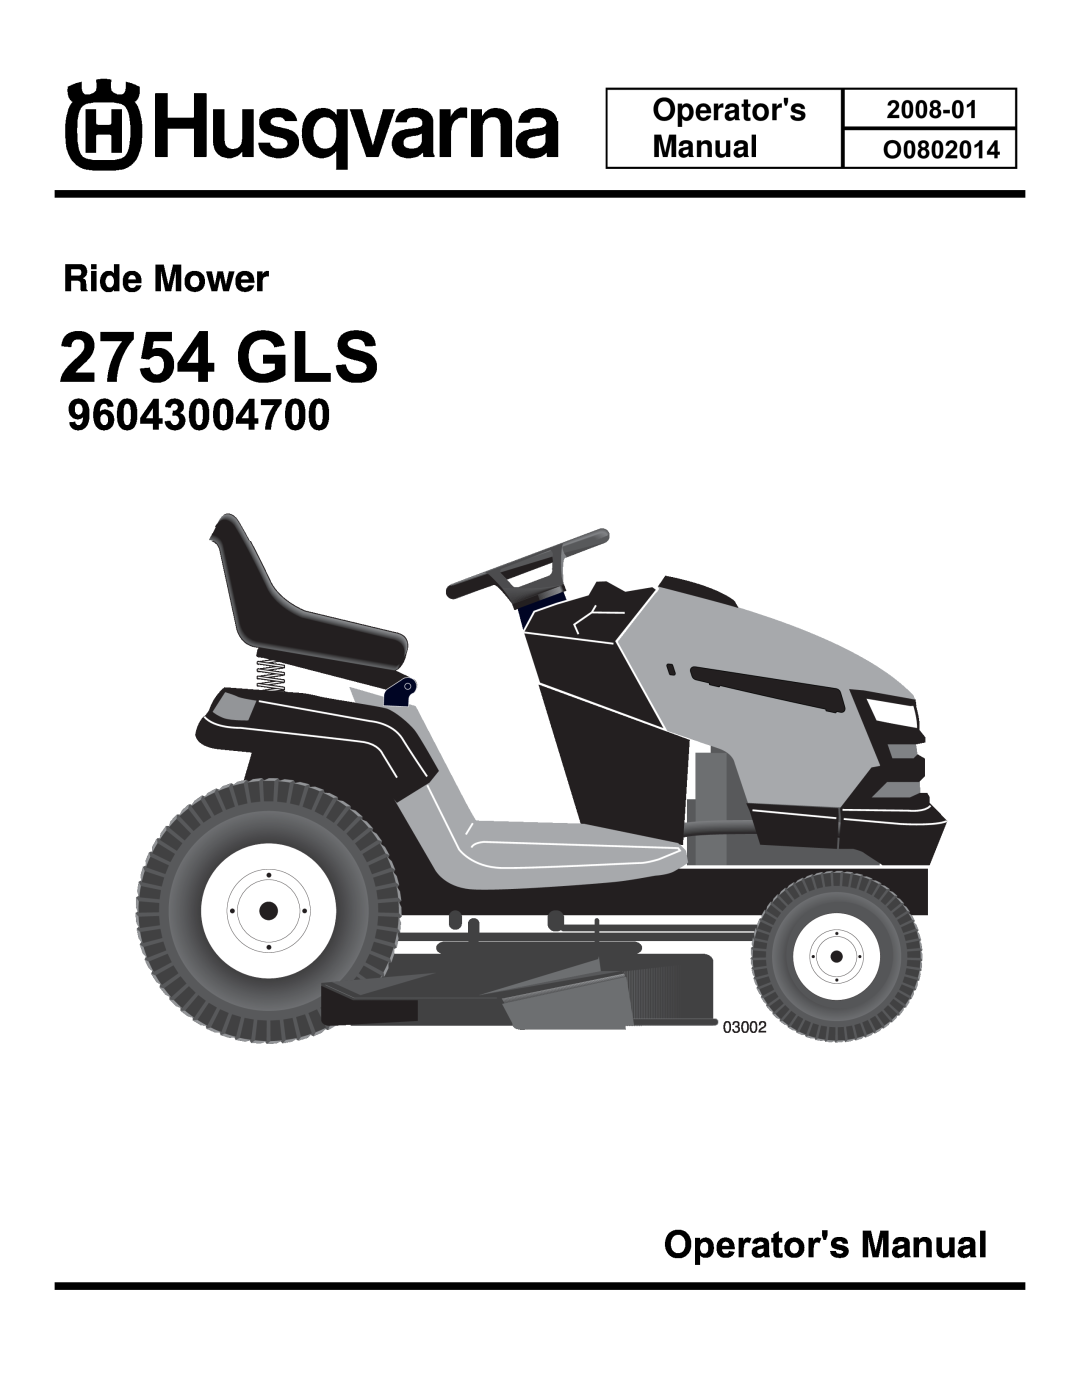 Husqvarna 2754 GLS manual 96043004700, Ride Mower, Operators Manual, 2008-01 O0802014, 03002 